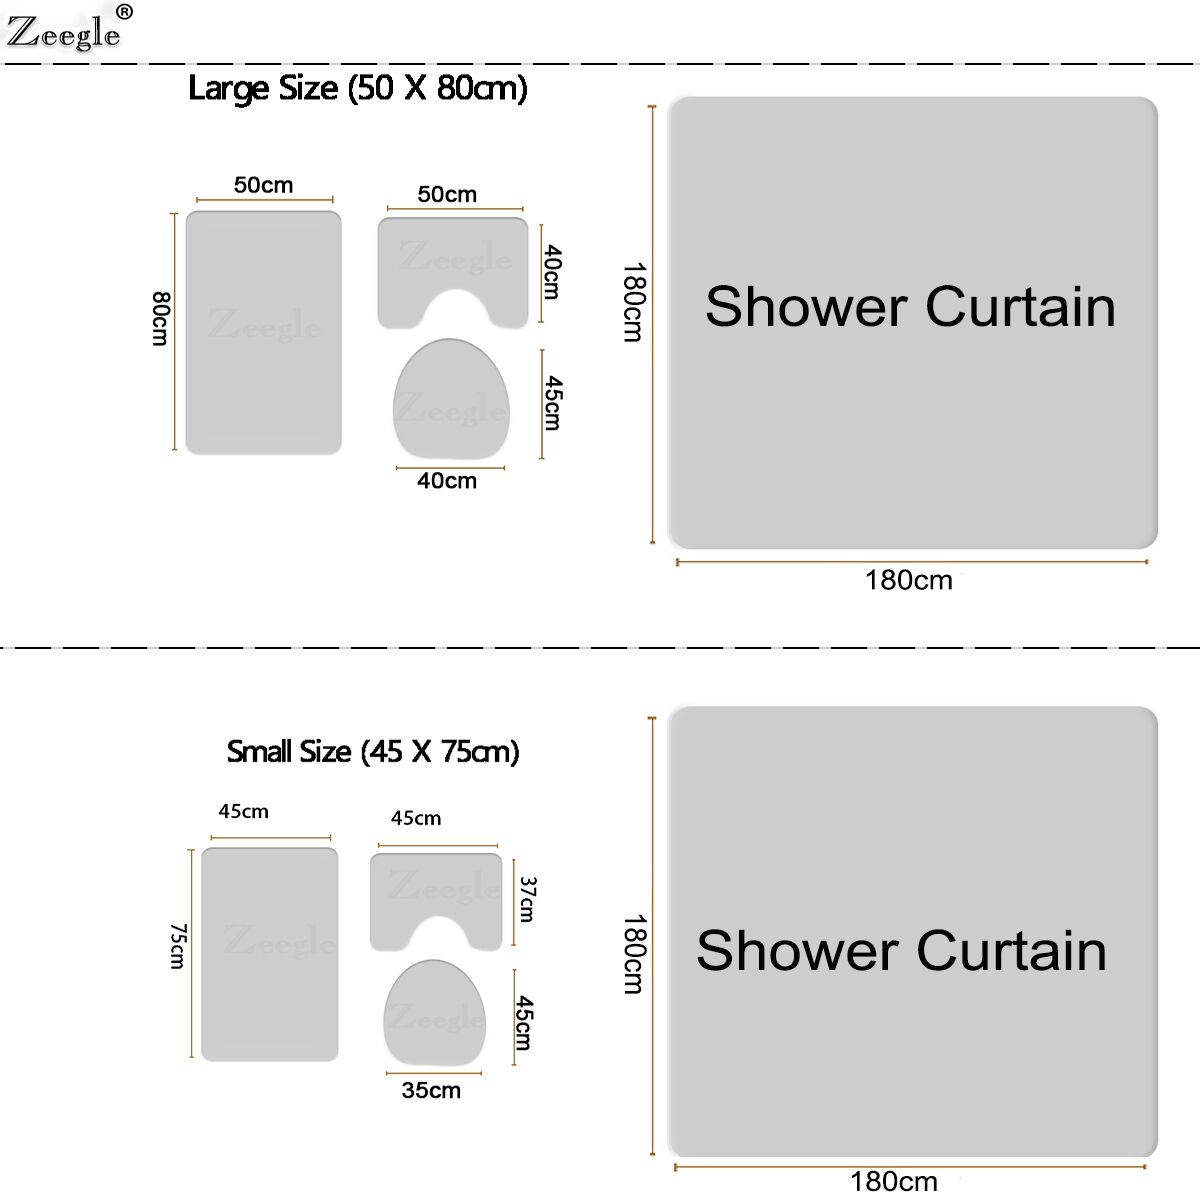 music theme bathroom mats & shower curtain 4-piece set